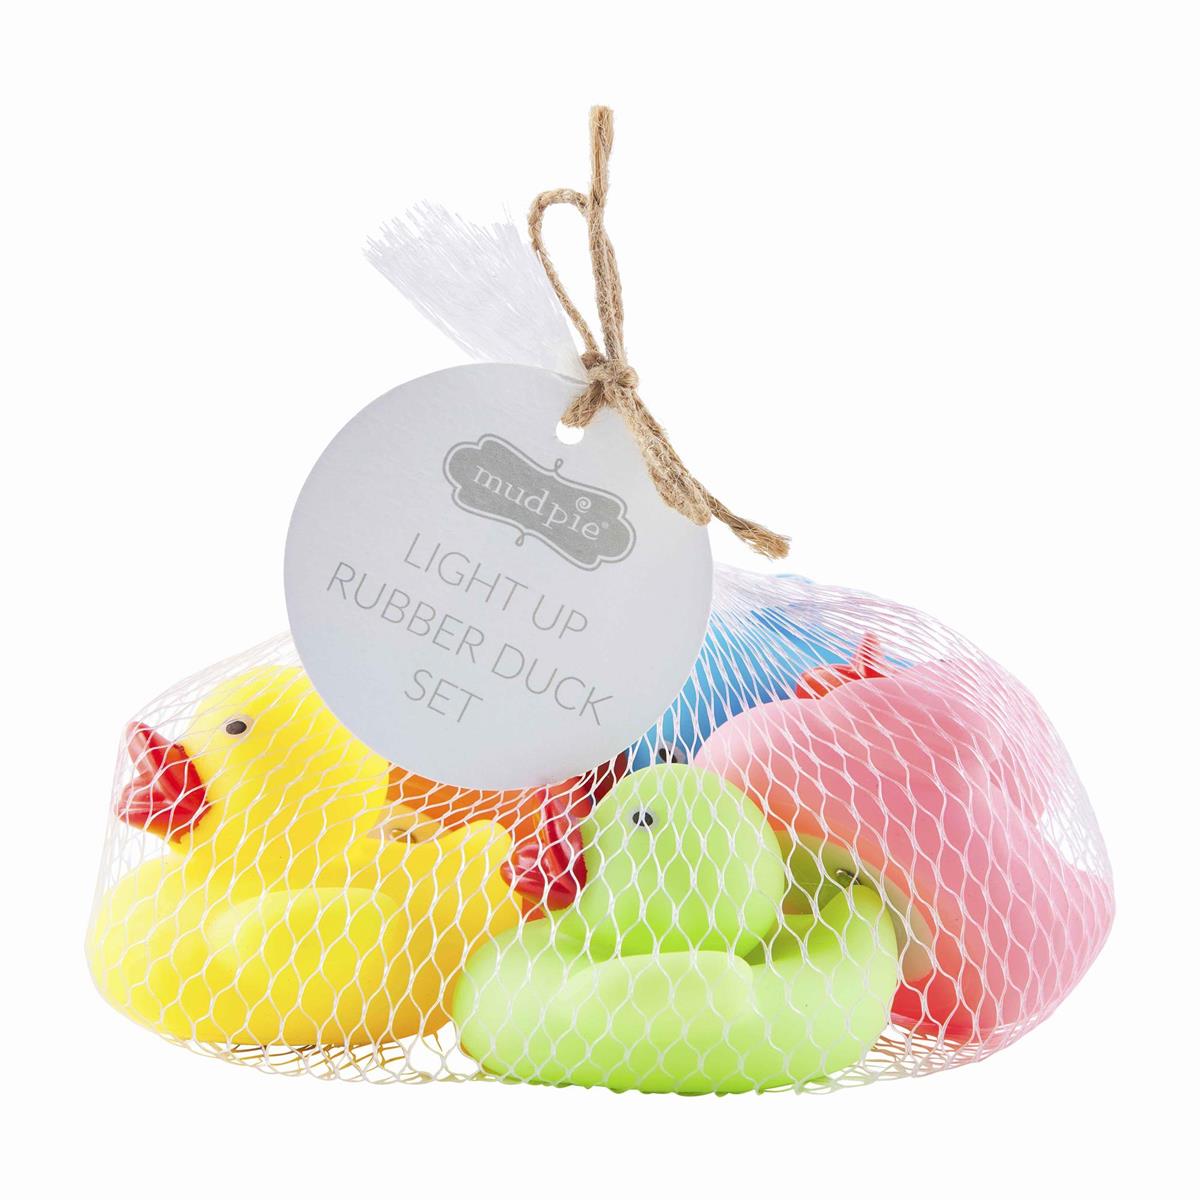 Light Up Rubber Duck Bath Toys